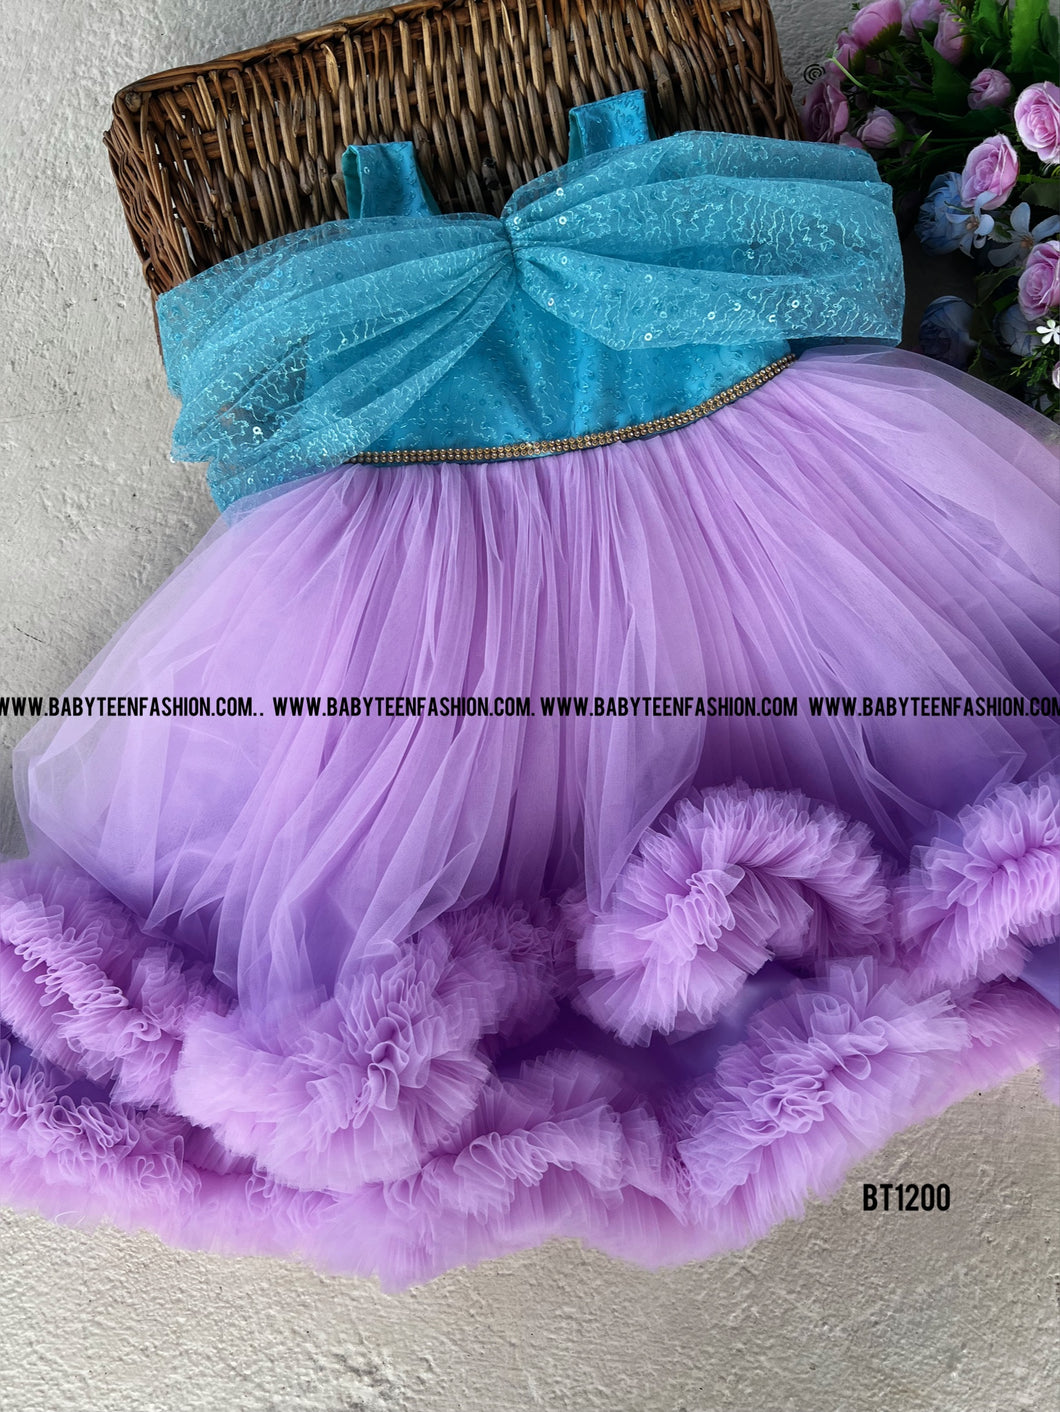 BT1200 Lavender Frost Princess Dress – Magic Awaits at Every Turn